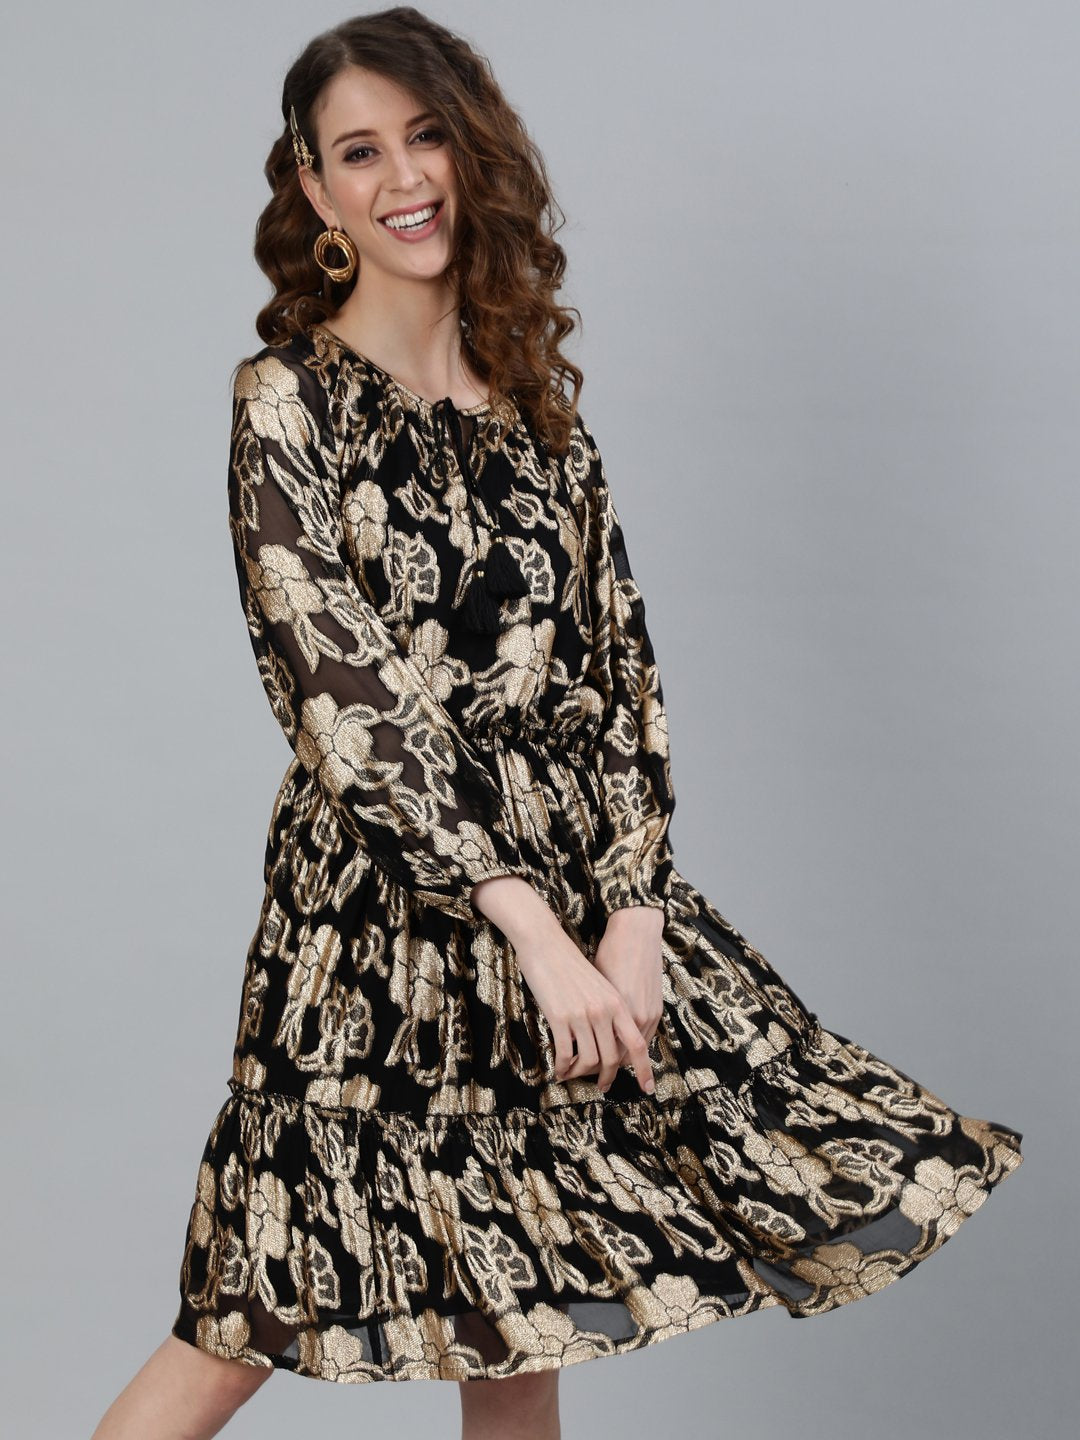 Ishin Women's Black Floral Shimmer Weave Tiered Dress